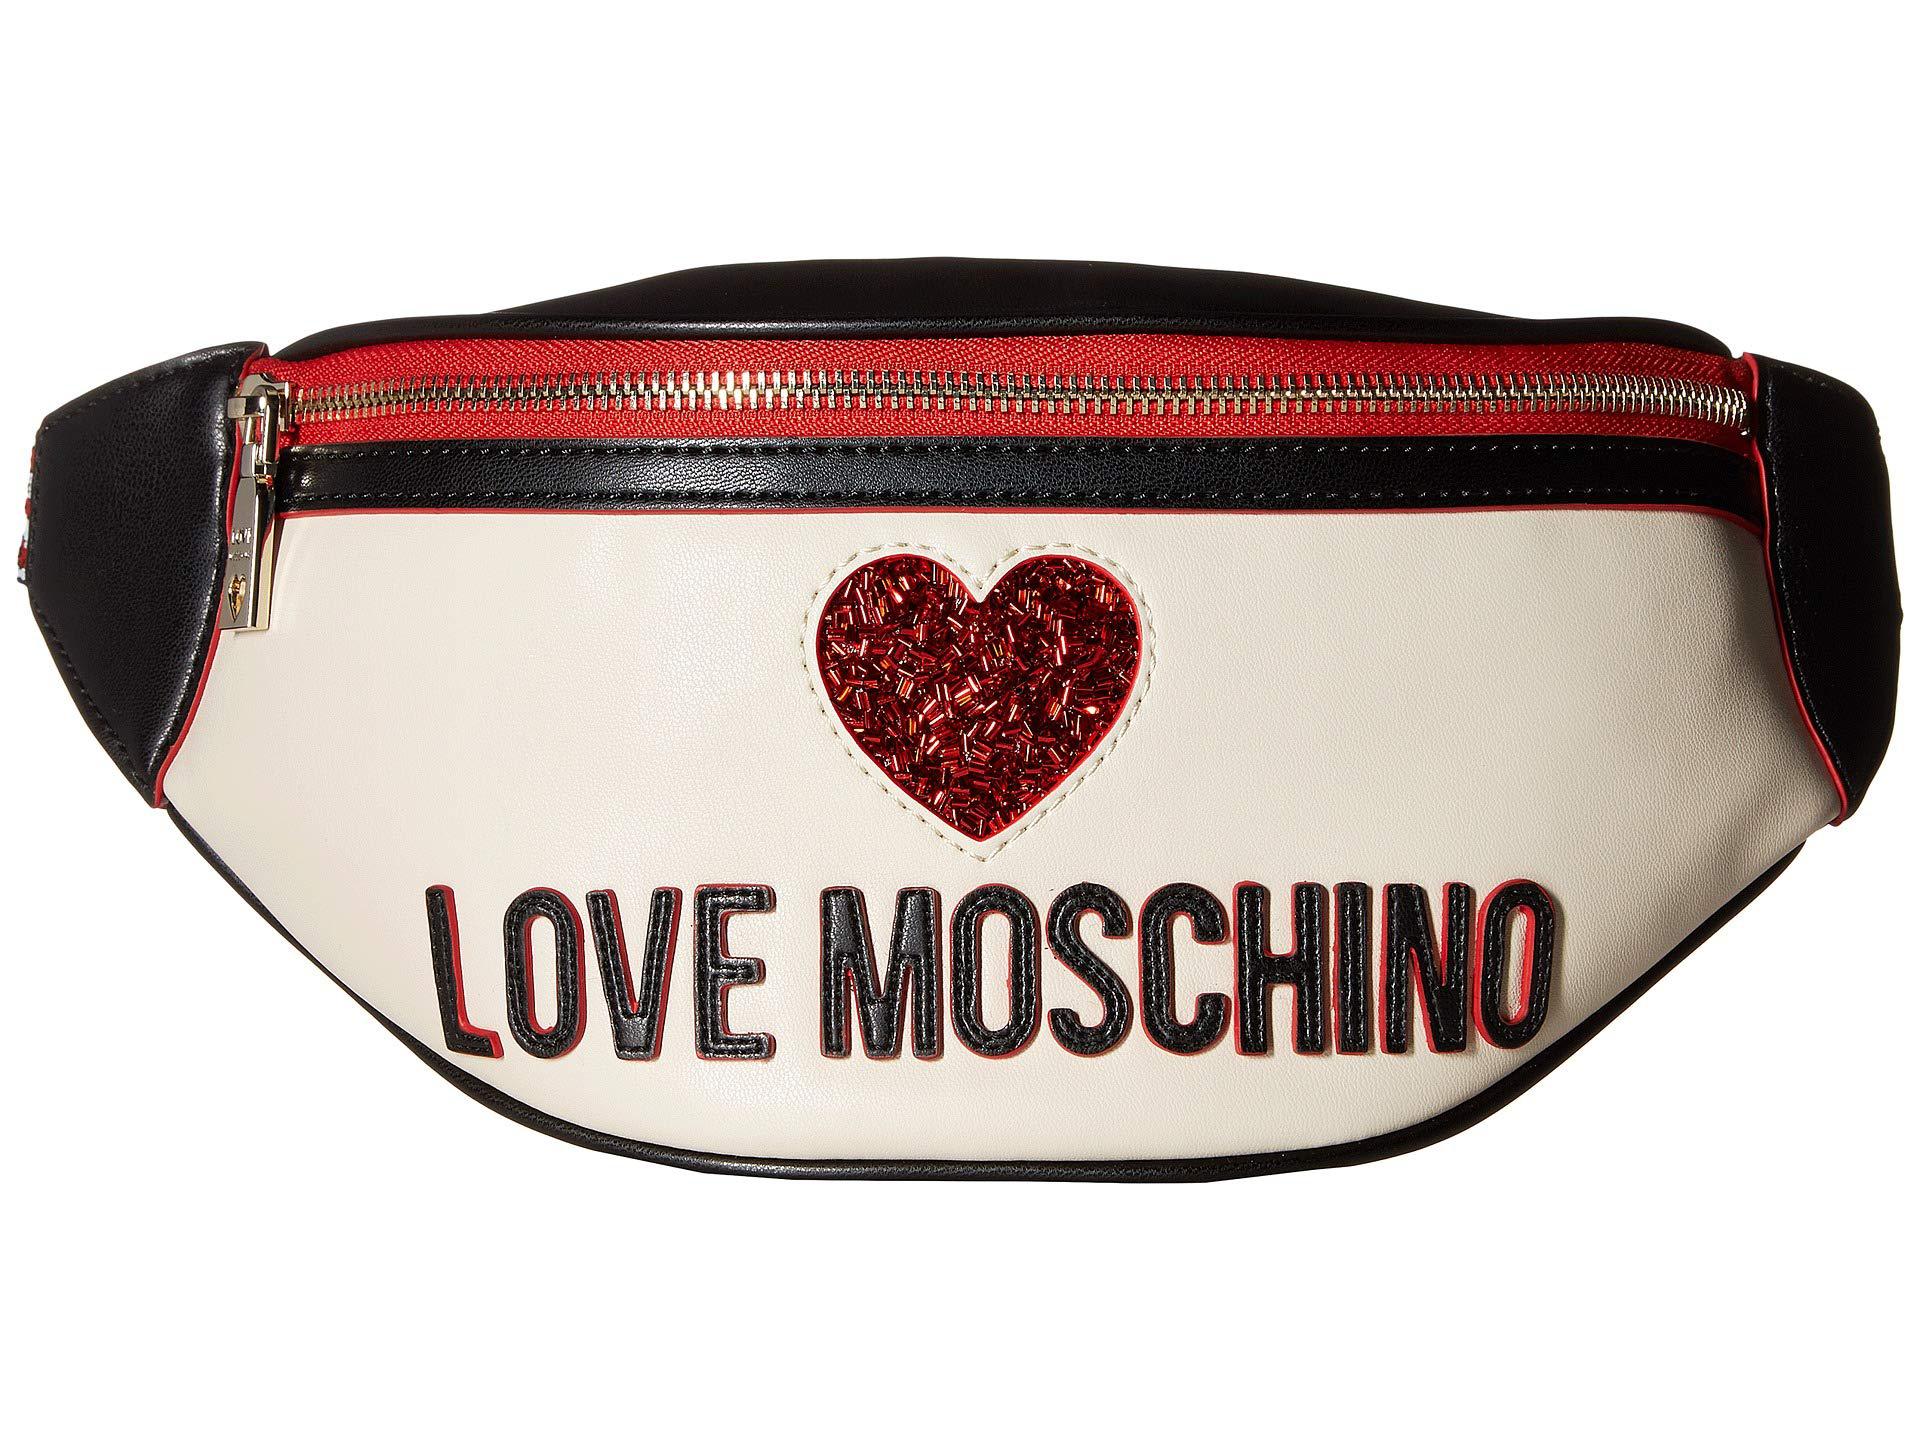 Lyst - Love Moschino Heart Design Fanny Pack (black/ivory) Handbags in ...